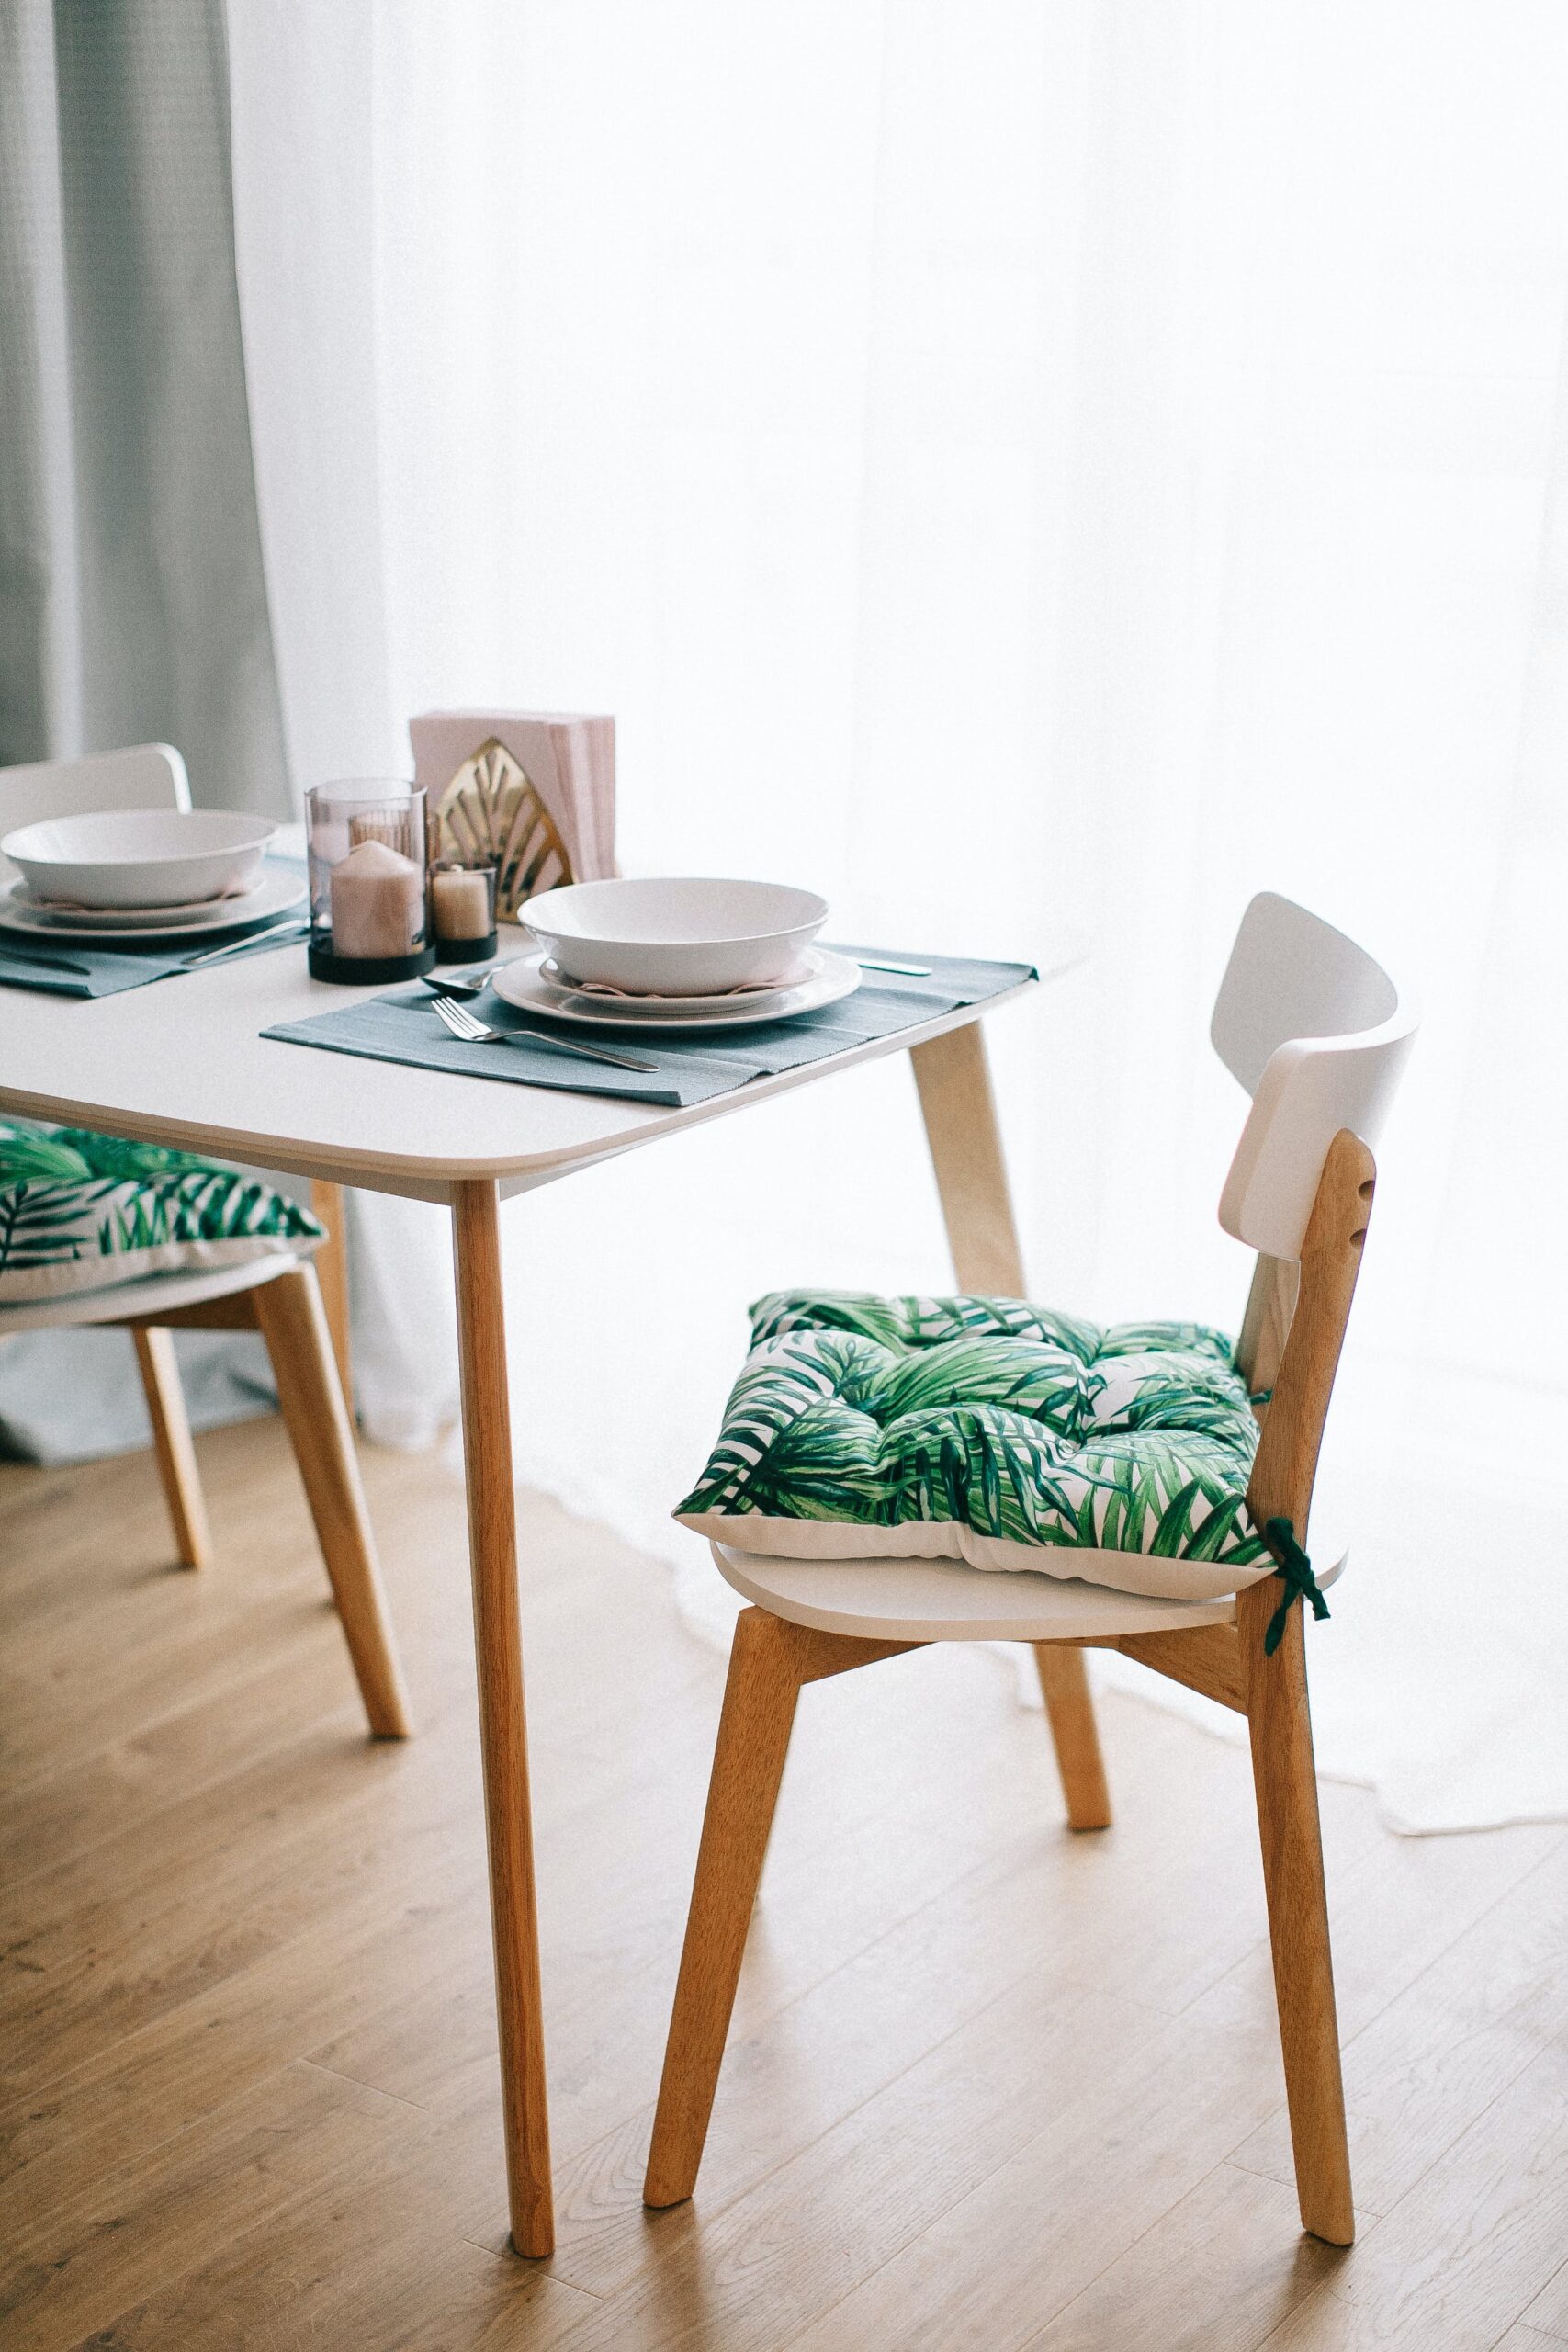 Cute minimal dining furniture